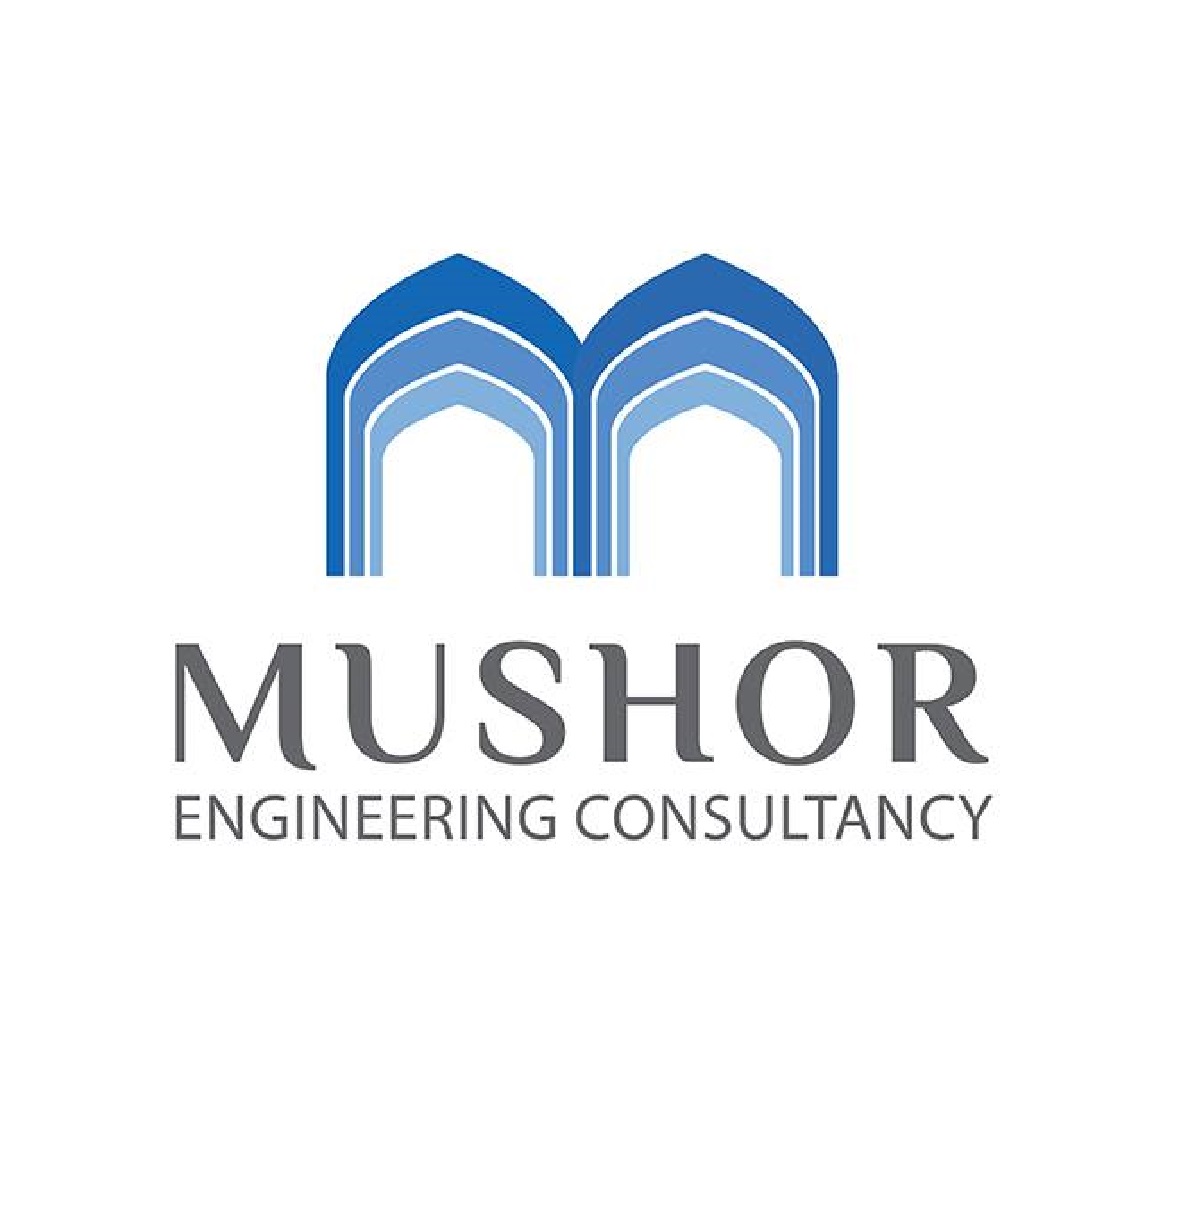 Mushor Engineering Consultancy